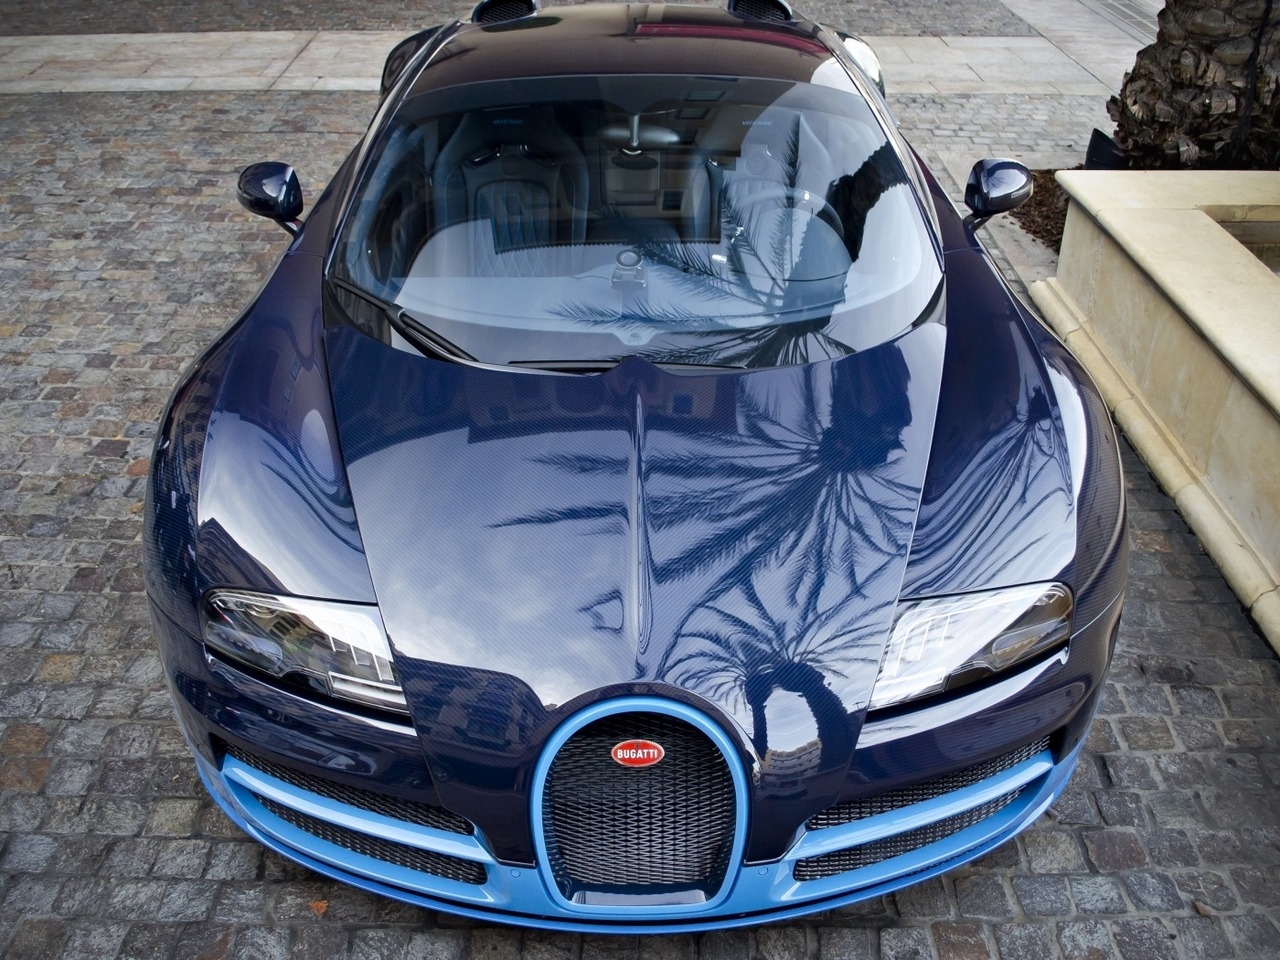 Bugatti Veyron Front View 1280 x